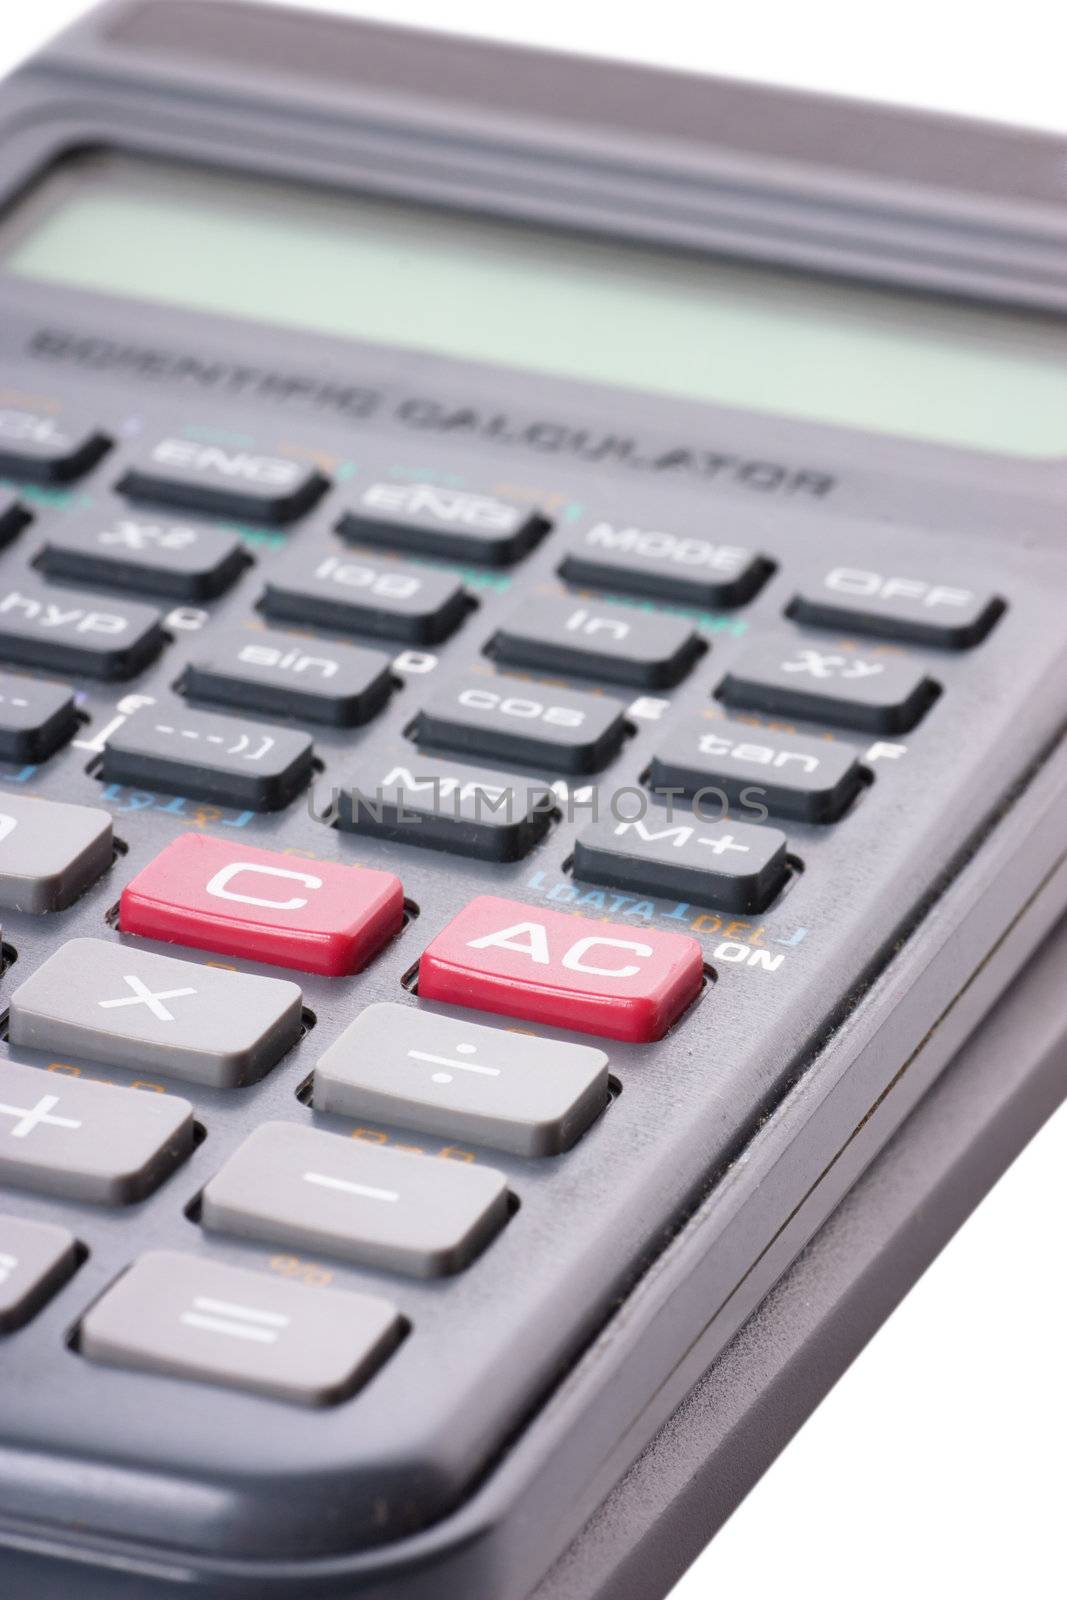 Calculator by AGorohov